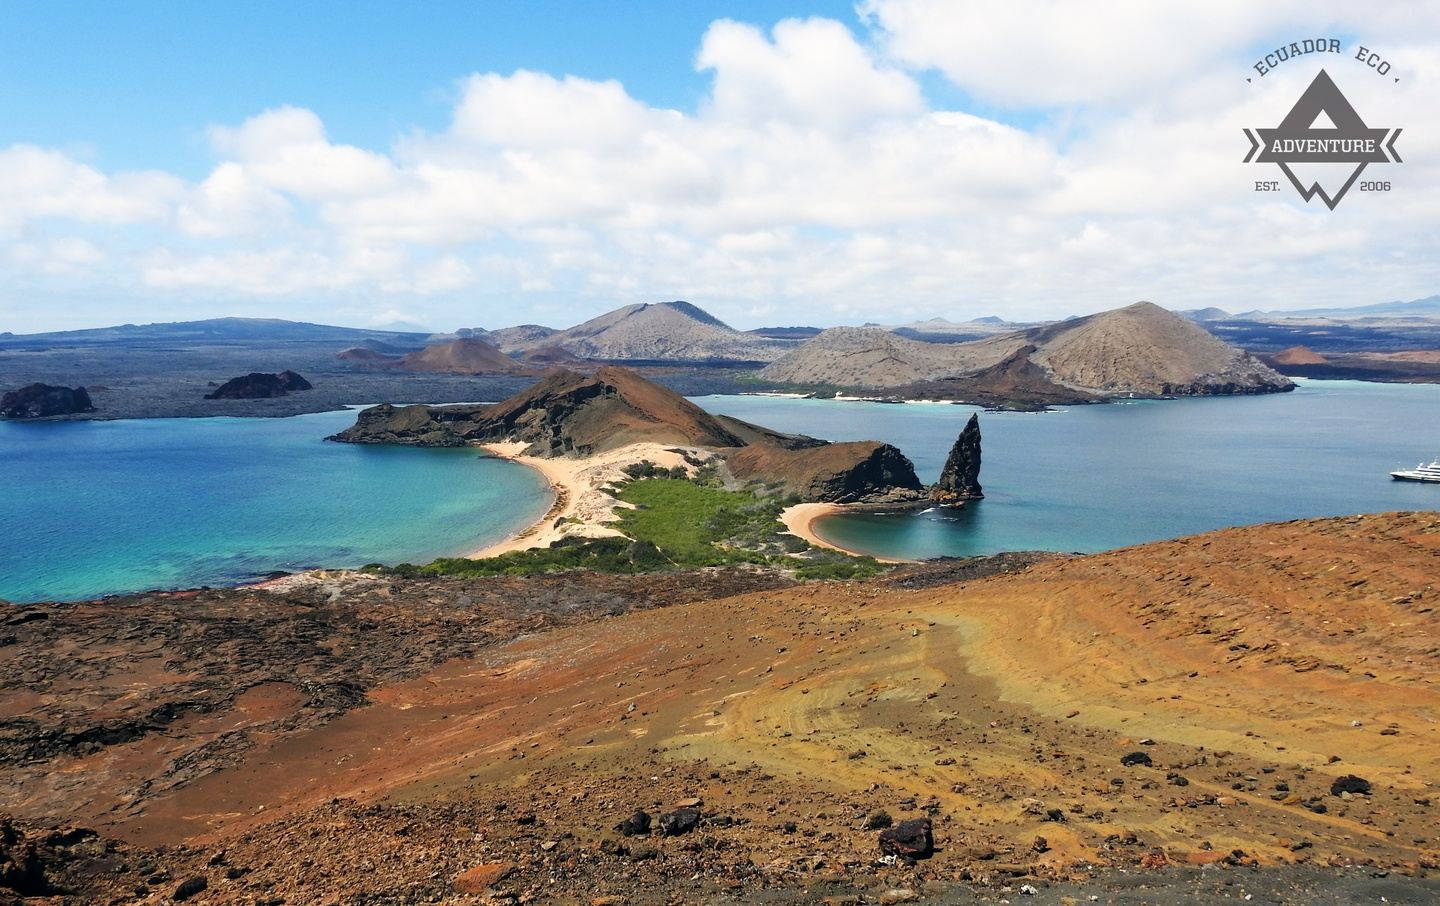 Galapagos Islands - Adventure 10 day tour